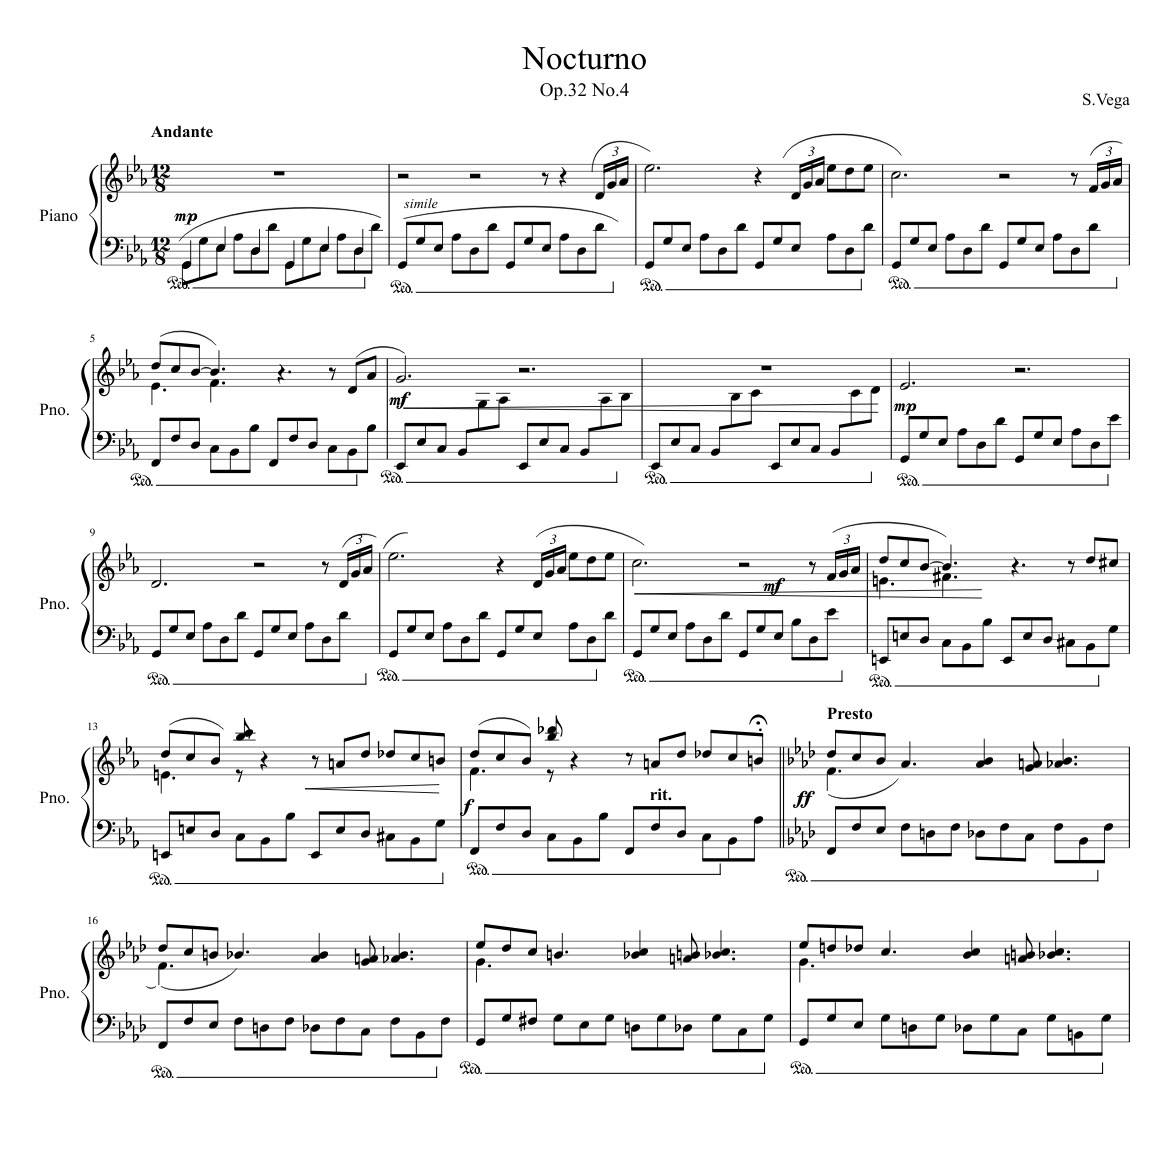 Nocturno Op.32 No.4 (Digital album by Carlos Marquez!!) Sheet music for  Piano (Solo) | Musescore.com